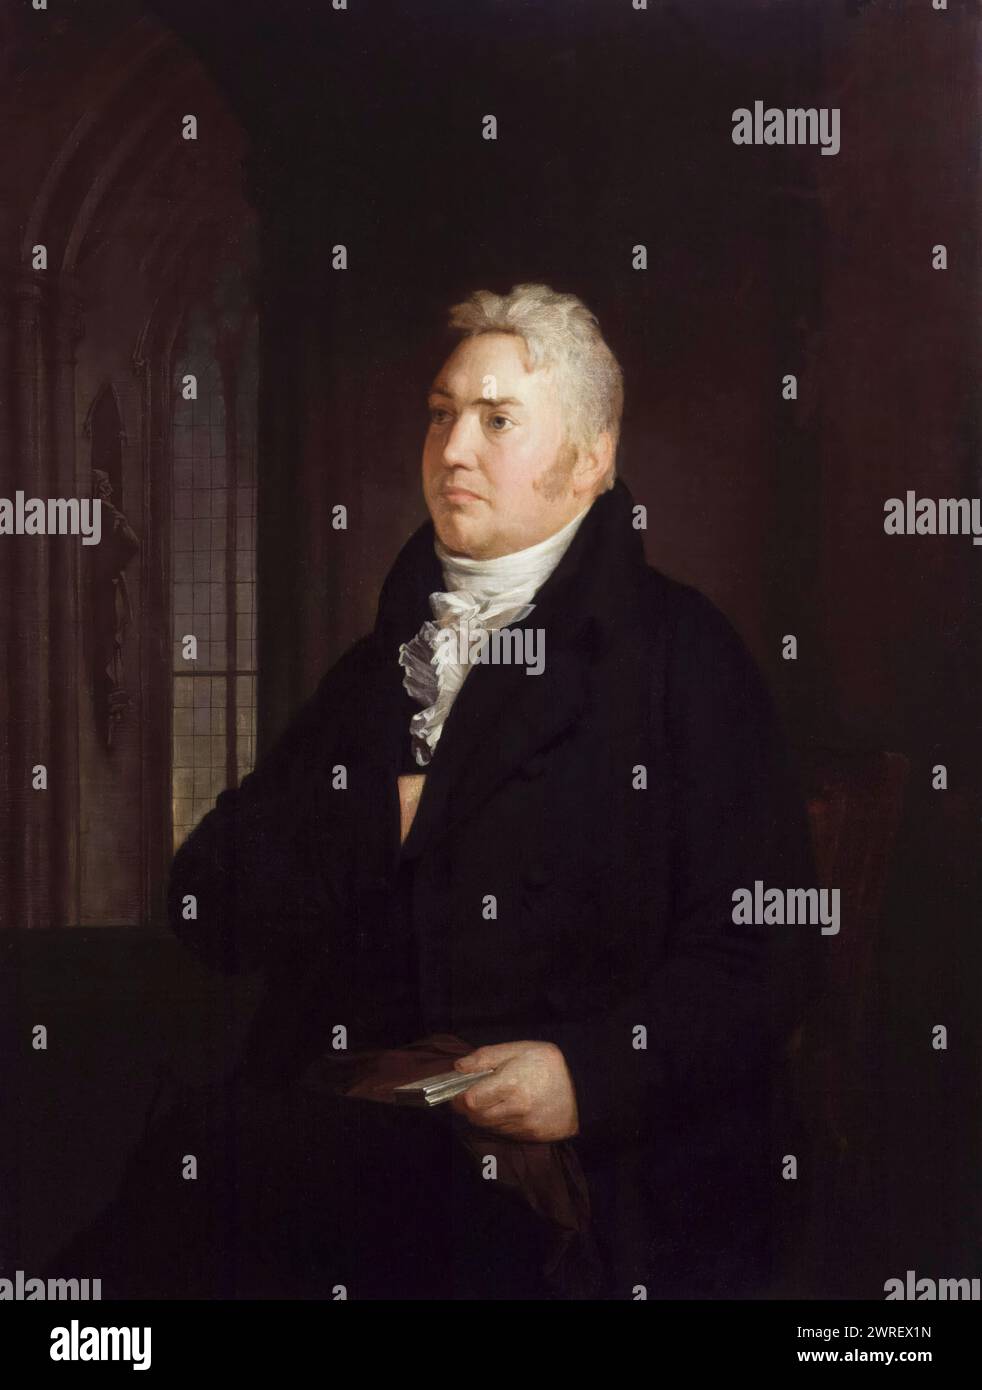 Samuel Taylor Coleridge (1772-1834), English Romantic poet, portrait painting in oil on canvas by Washington Allston, 1814 Stock Photo